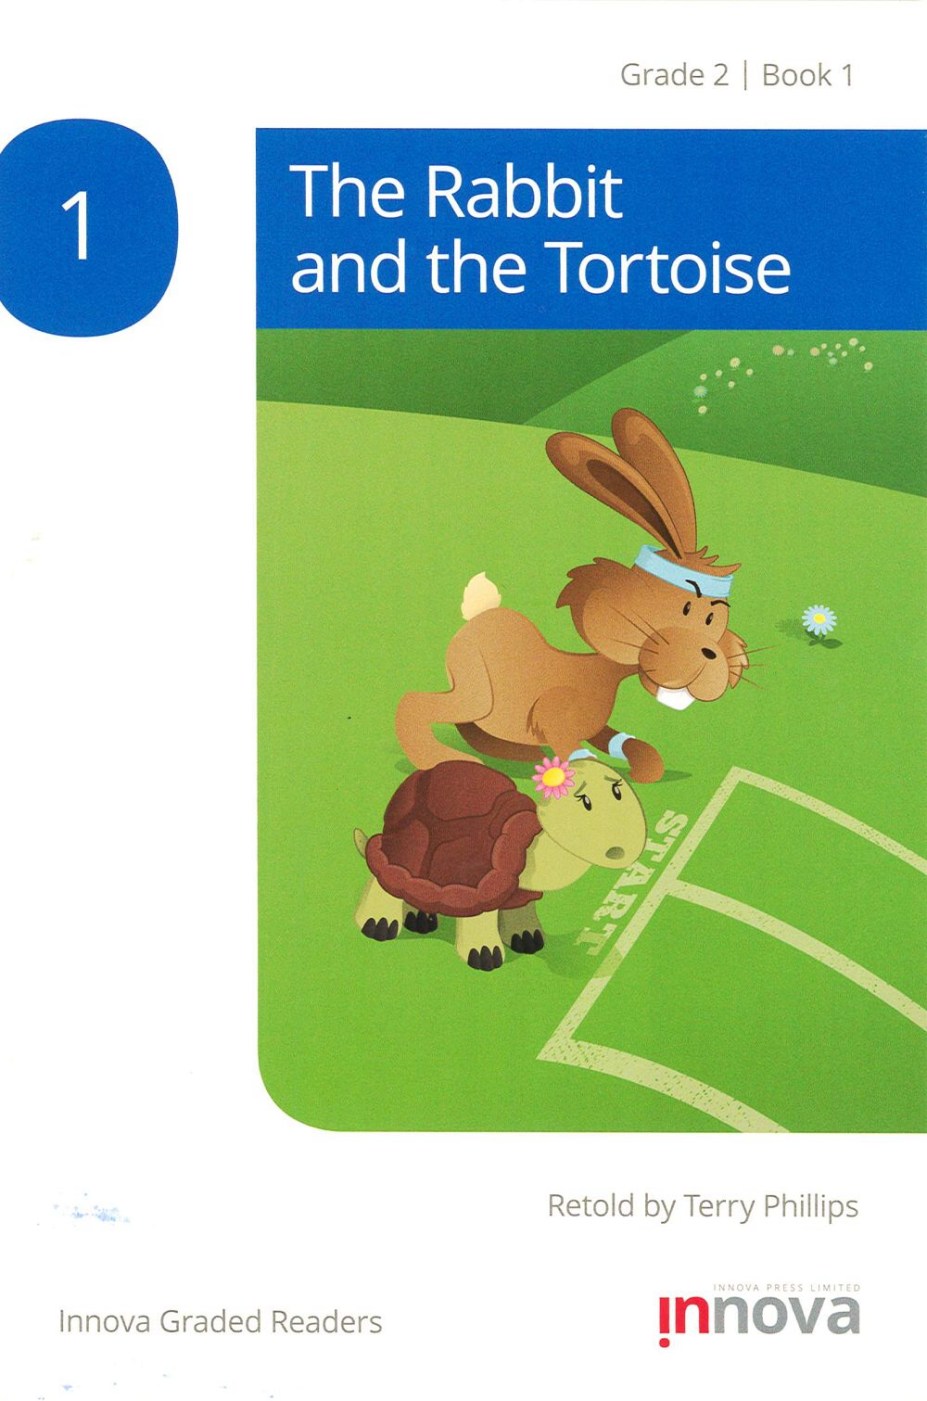 Innova Graded Readers Grade 2 (Book 1): The Rabbit and the Tortoise